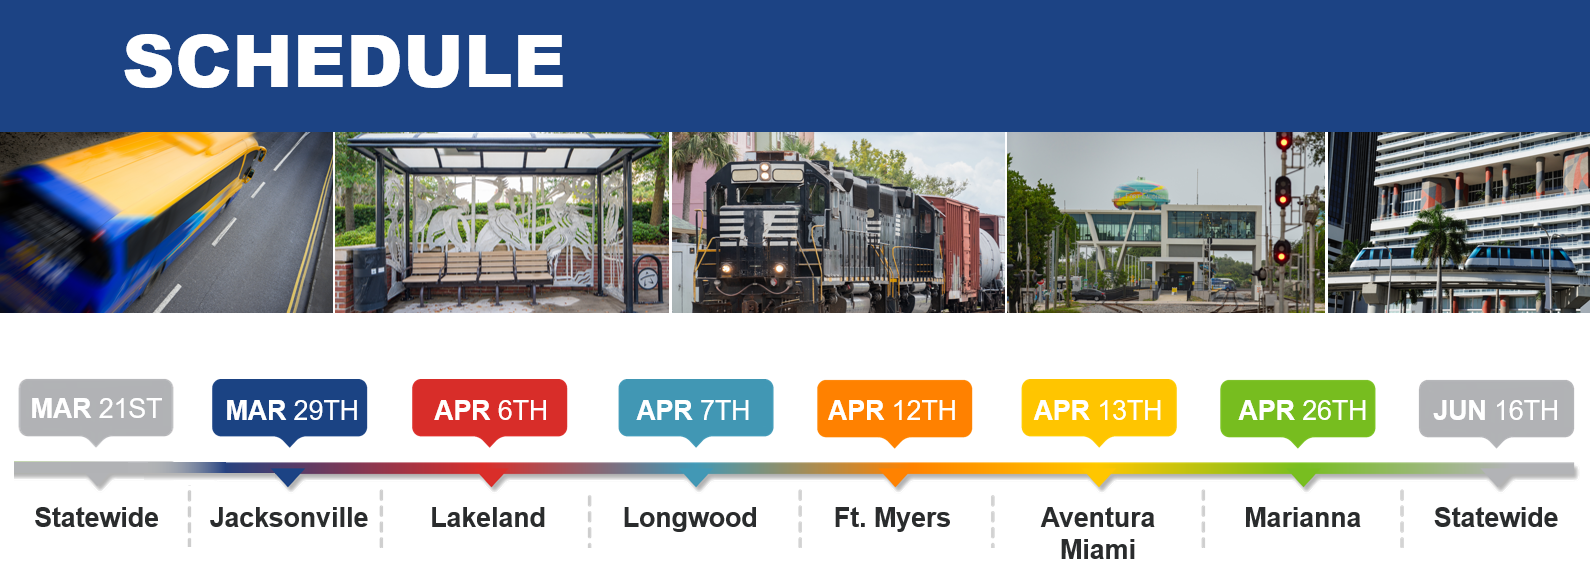 Rail-Transit Regional Listening Session Schedule MAR 21ST Statewide, MAR 29TH Jacksonville, APR 6TH Lakeland, APR 7TH Longwood, APR 12TH Ft. Myers, APR 13TH Aventura Miami, APR 26TH Marianna, JUN 16TH Statewide